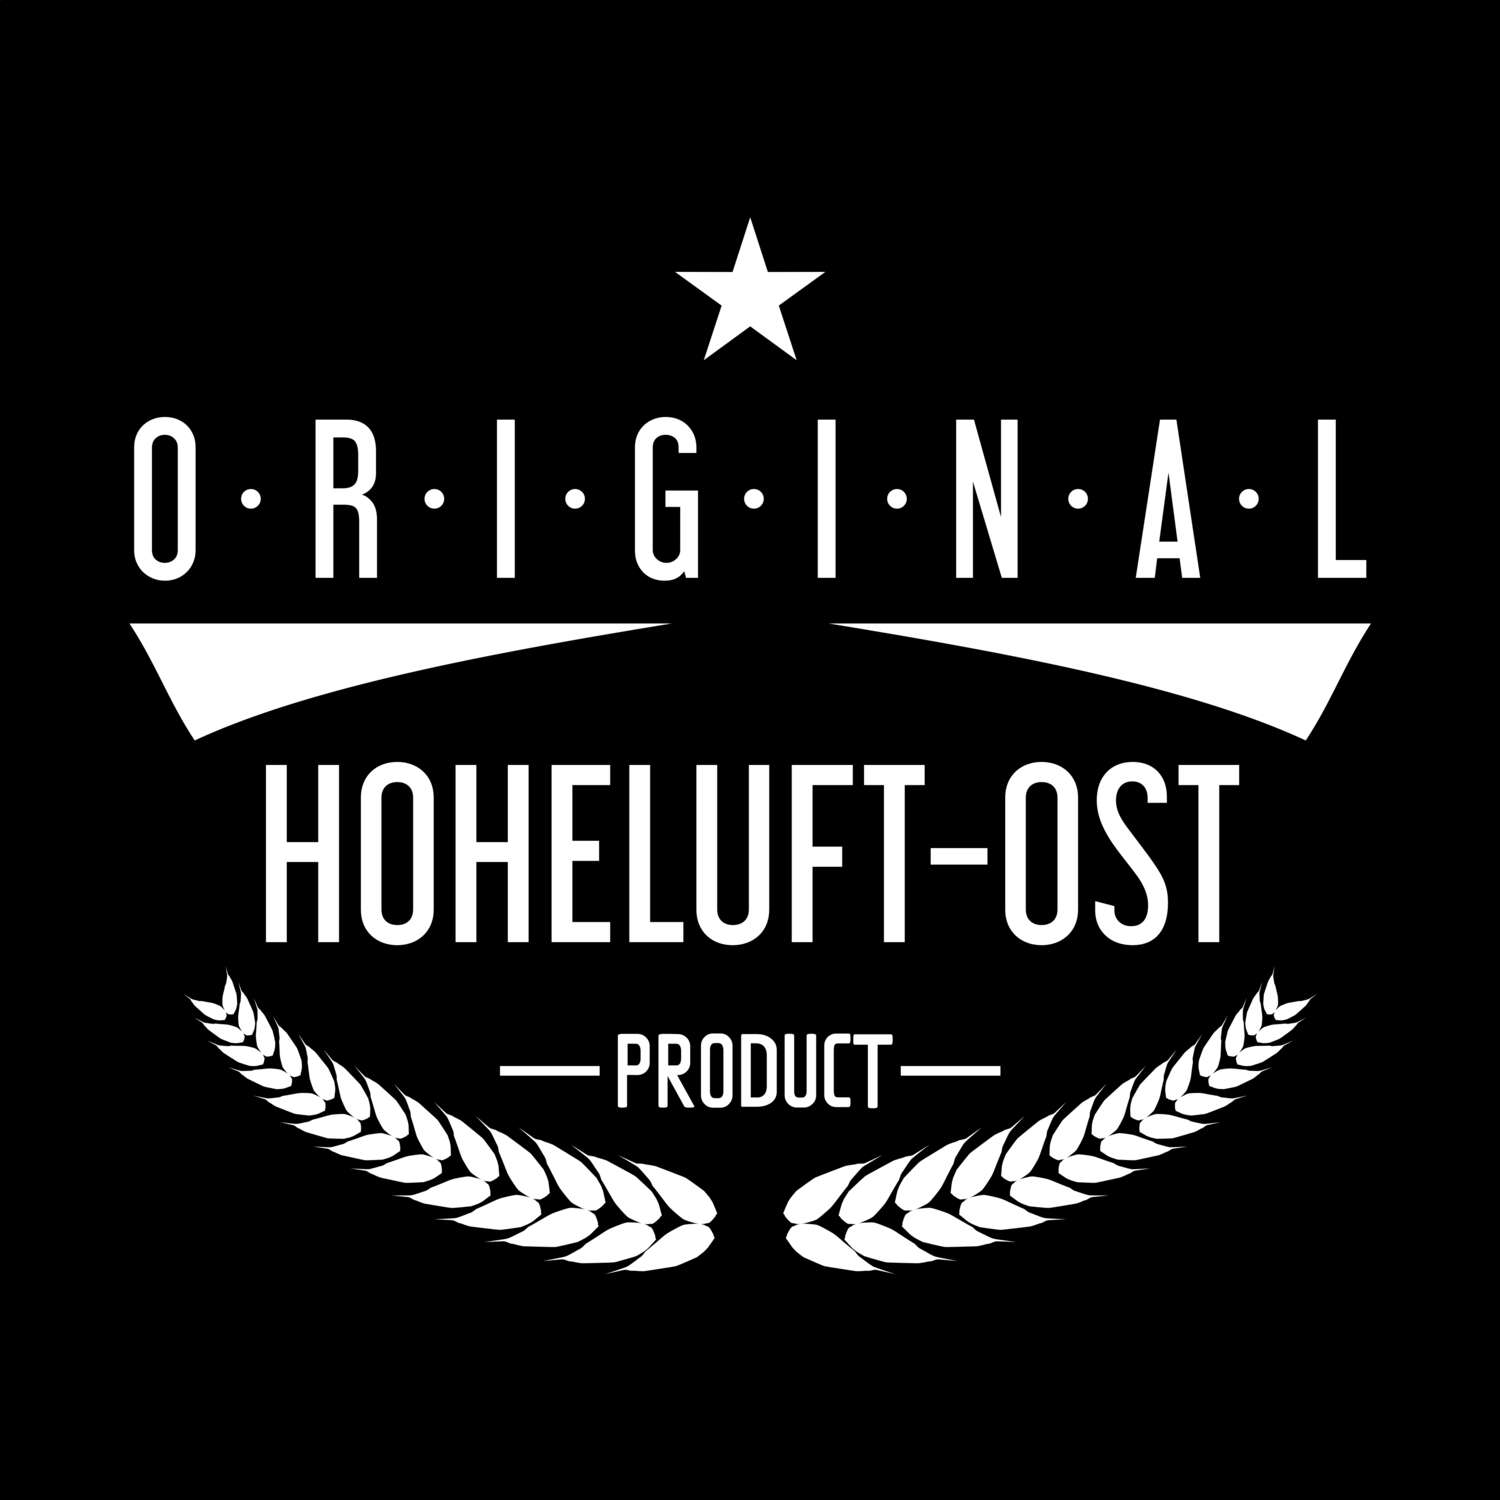 Hoheluft-Ost T-Shirt »Original Product«